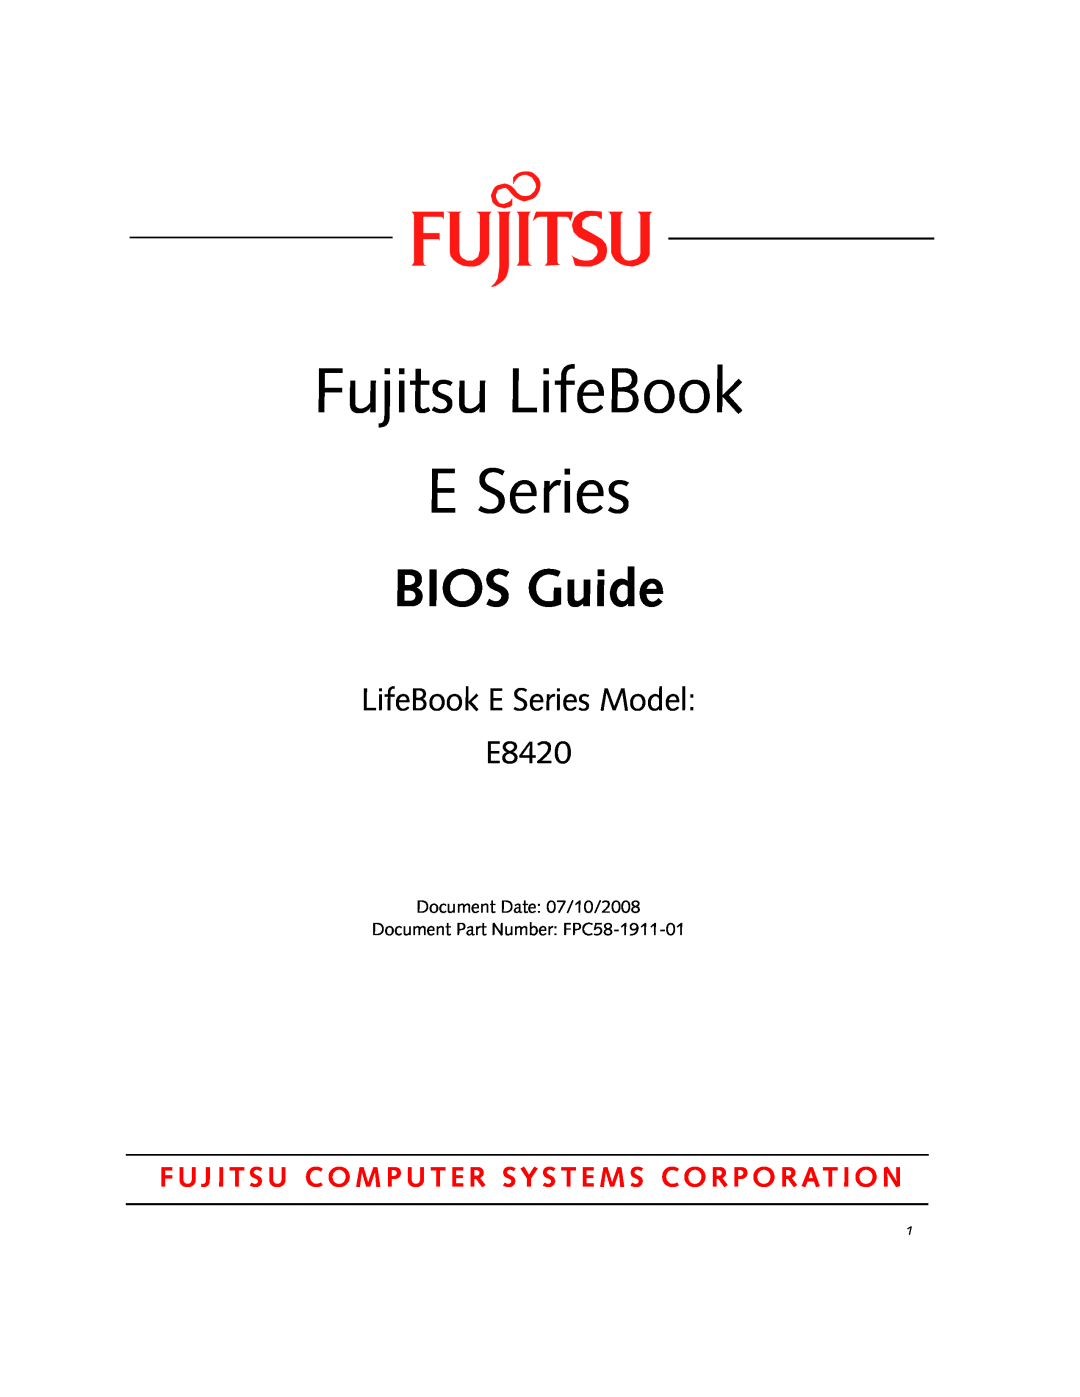 Fujitsu Siemens Computers manual Fujitsu LifeBook E Series, BIOS Guide, LifeBook E Series Model E8420 